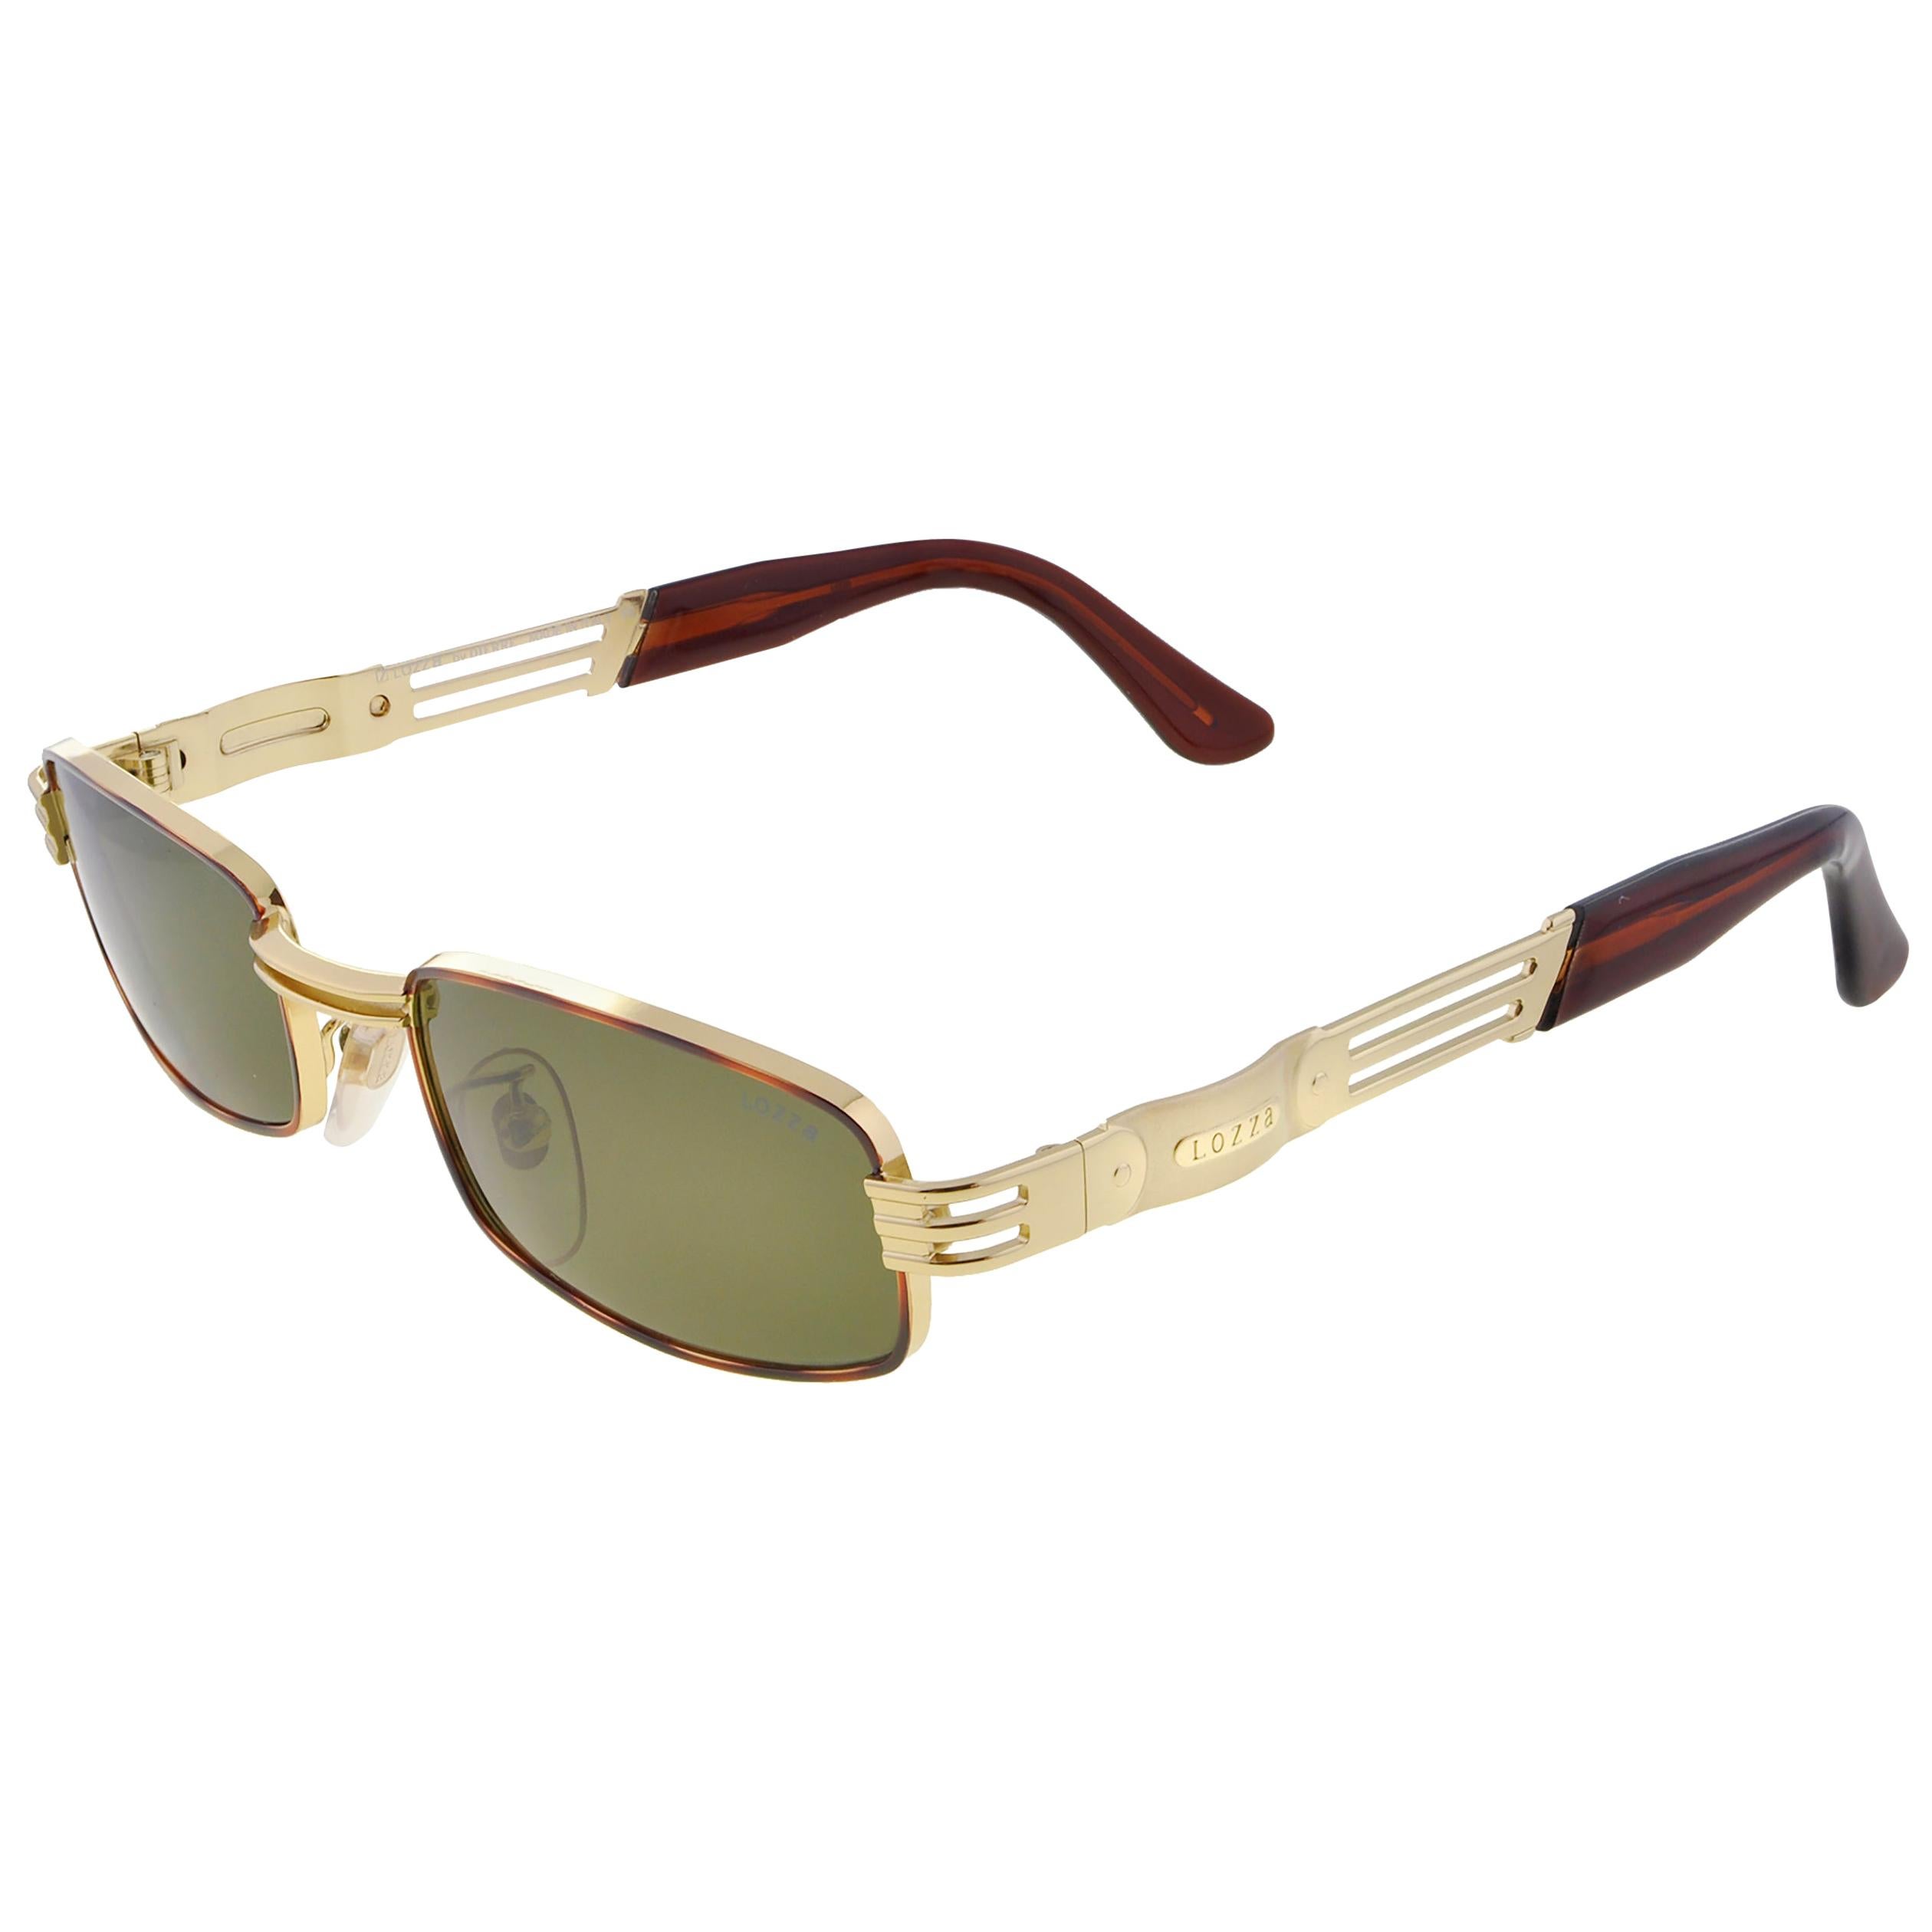 Vintage sunglasses by Lozza, rectangular designer sunglasses 80s